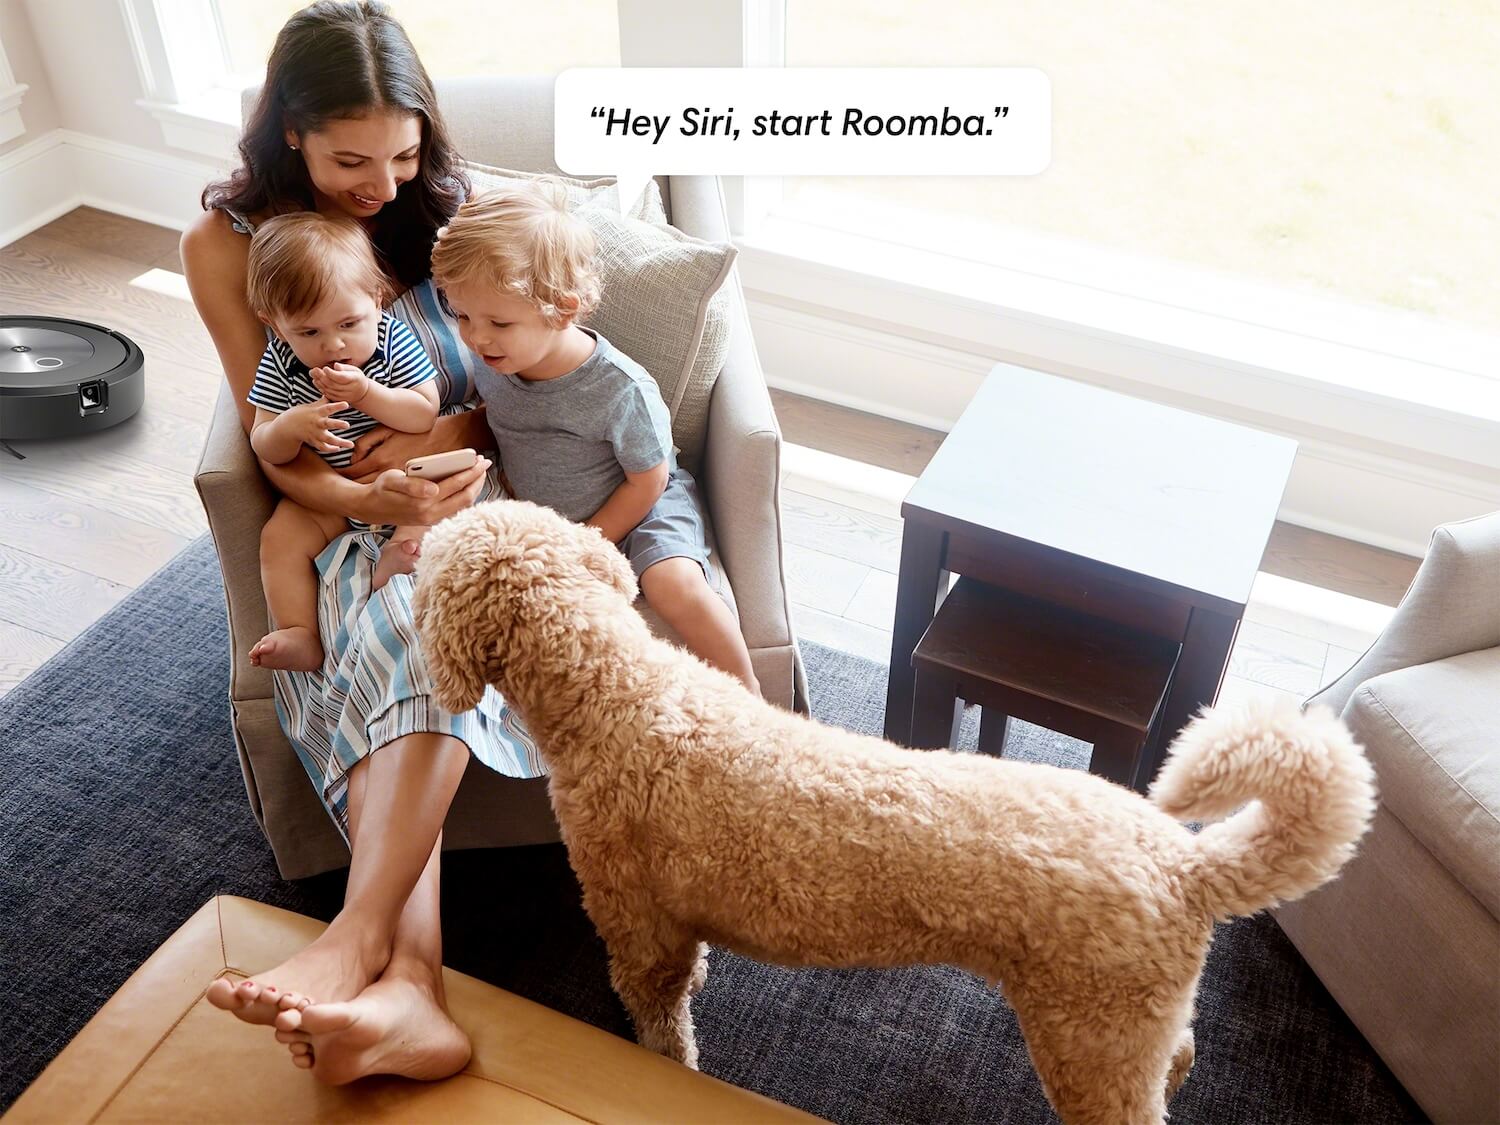 Roomba Siri integration